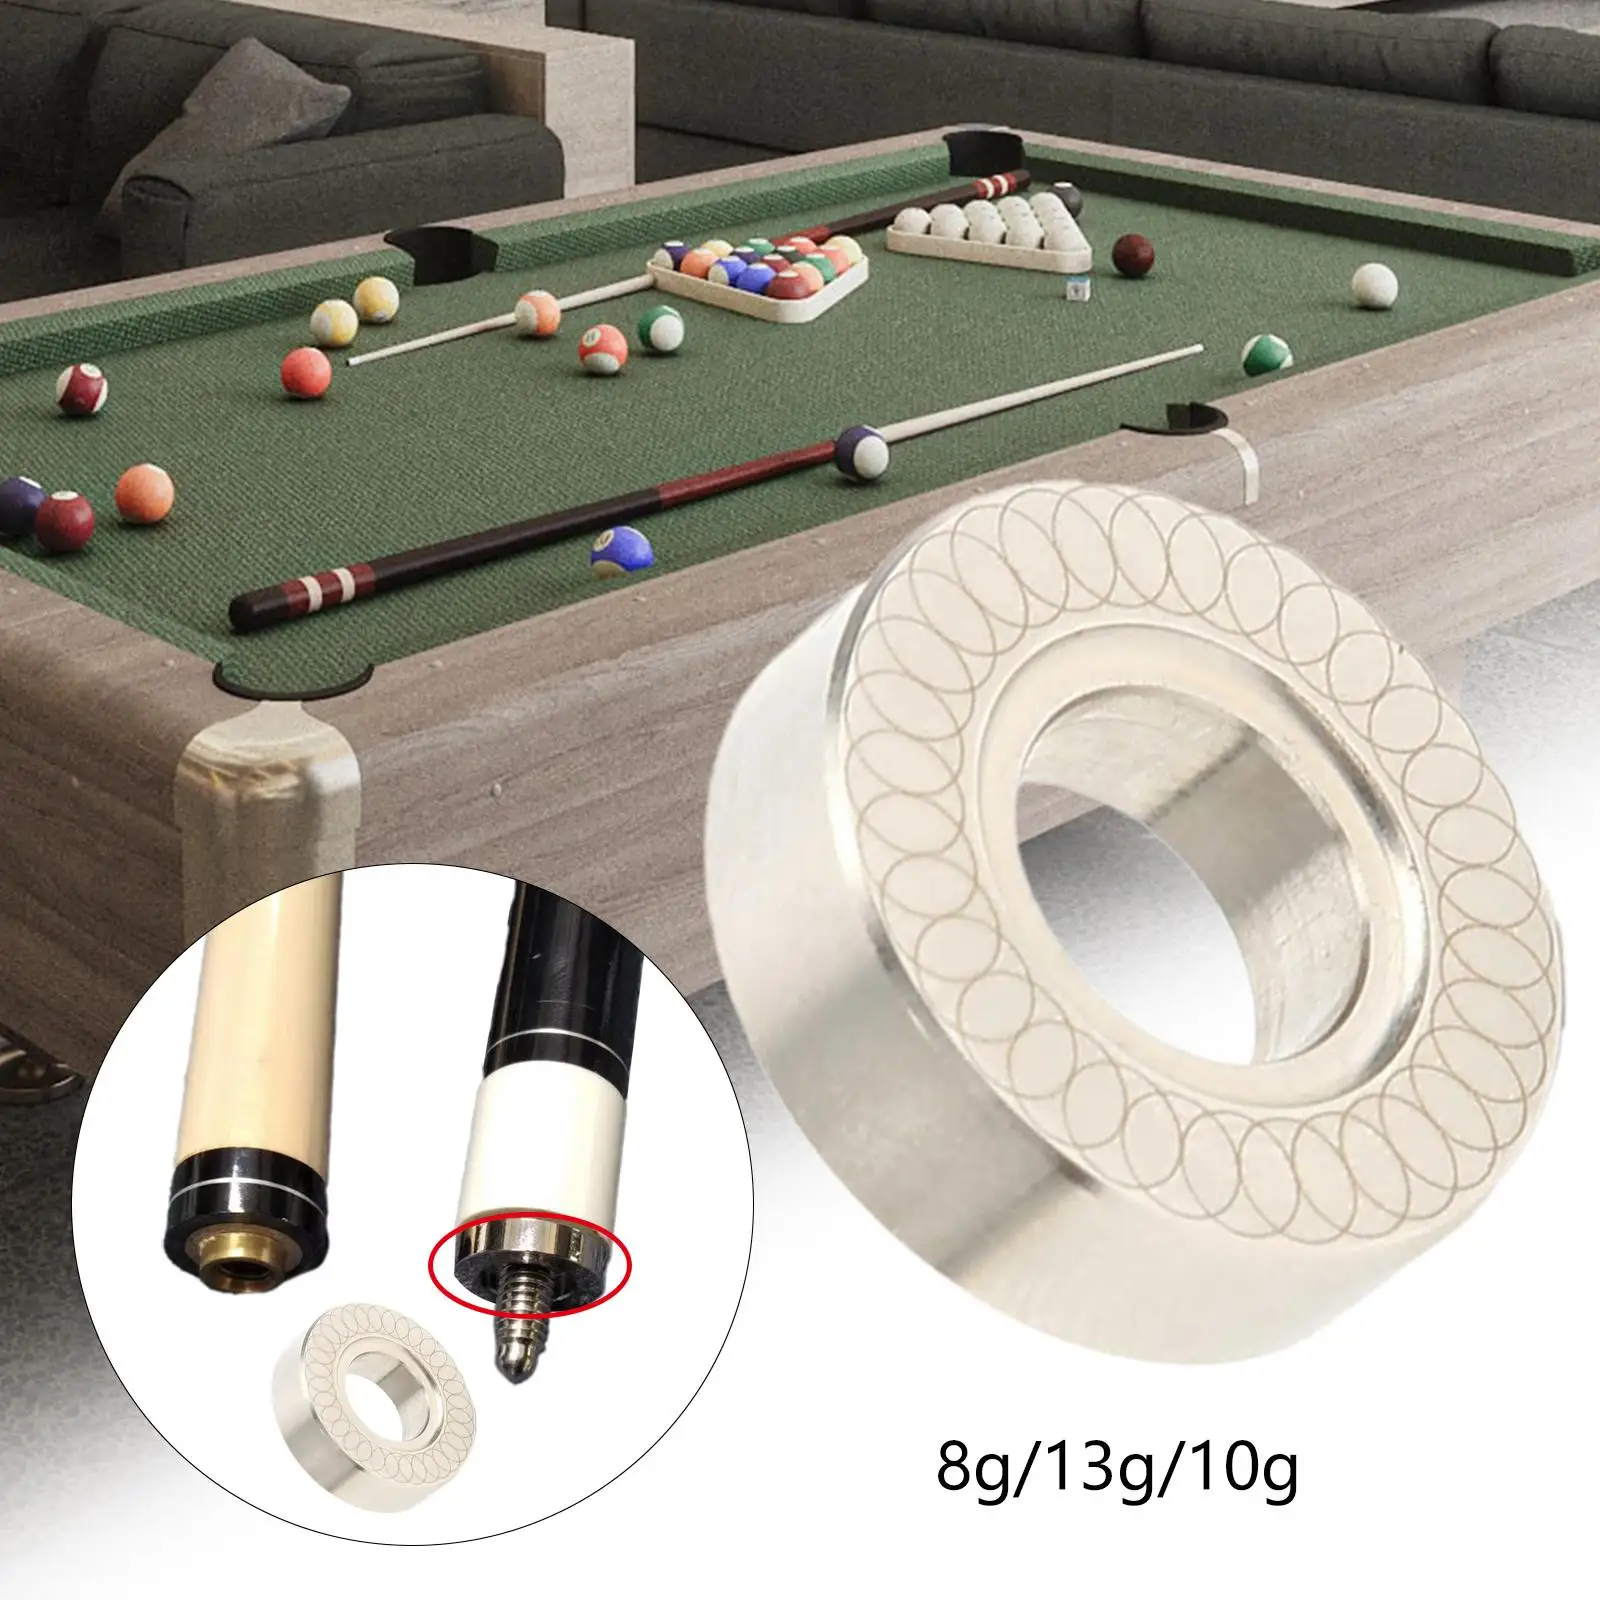 Billiard Pool Stick Cue Weight rings Stainless Steel Increased Club Weight Anti Rust Durable Practical Tool Wear Resistant